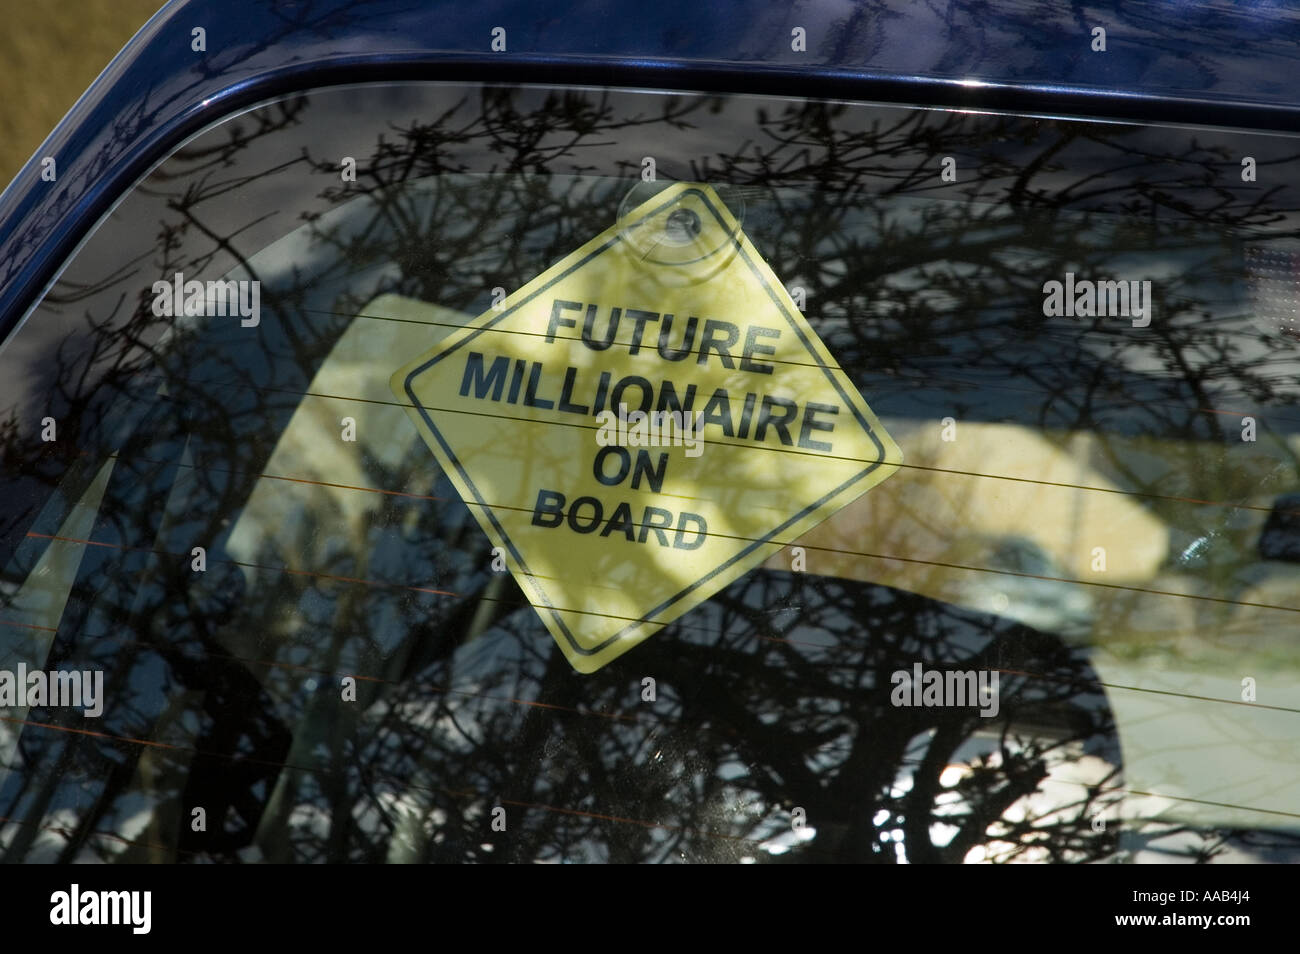 Future millionaire on board sticker in car window Stock Photo